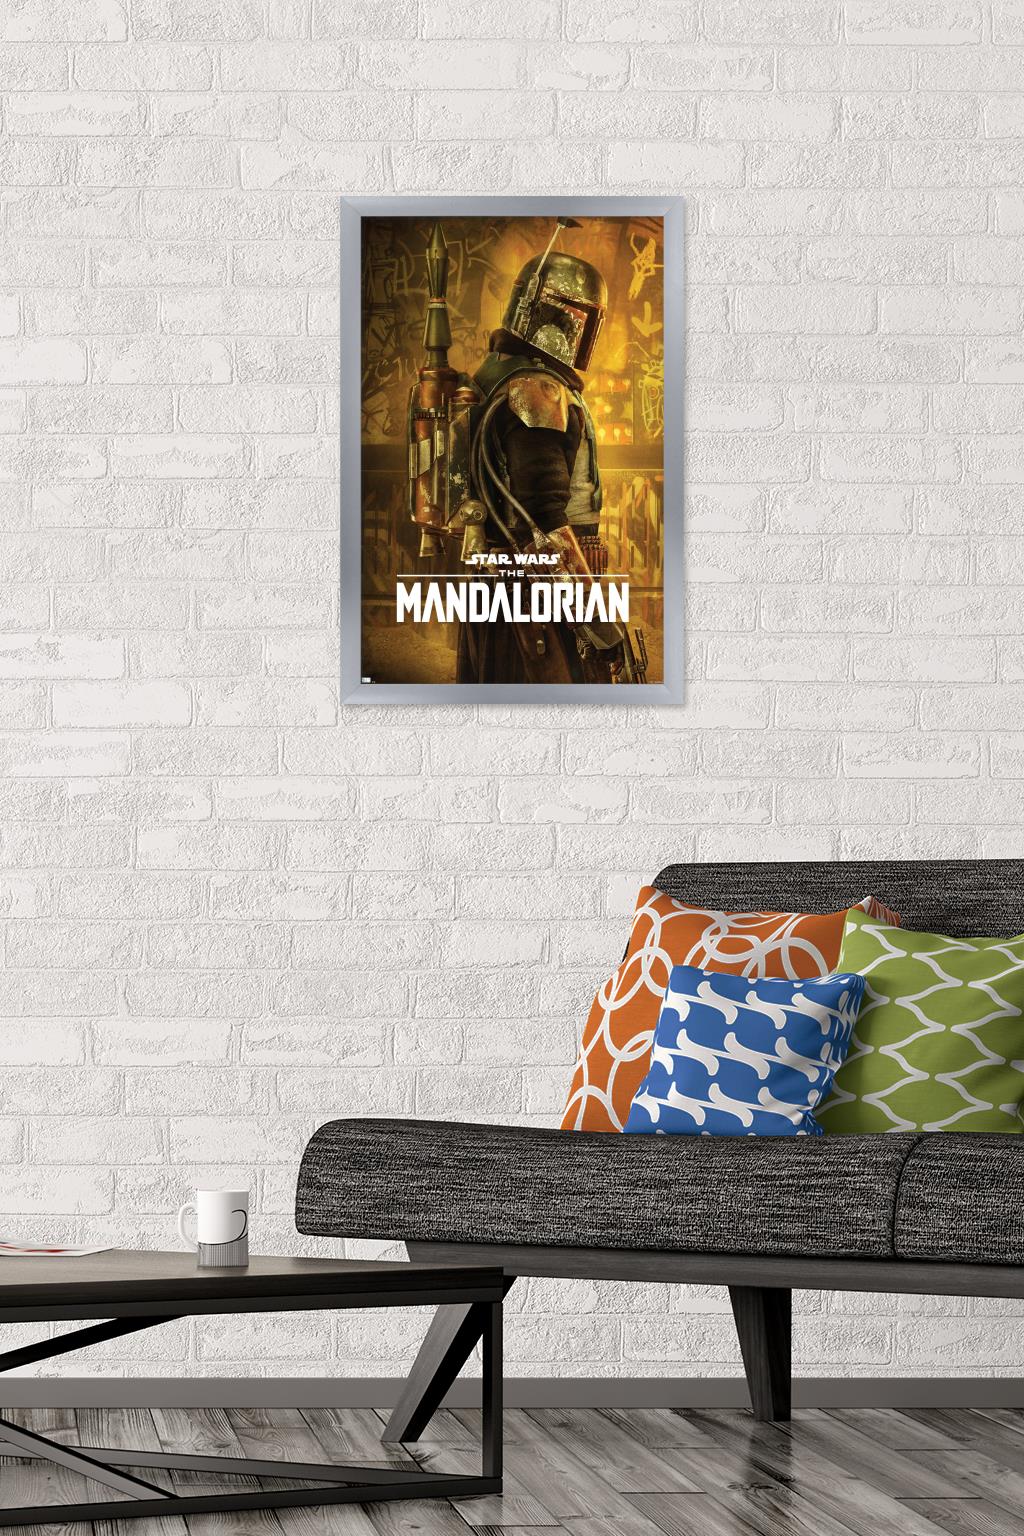 Star Wars: The Mandalorian Season 2 - Boba Fett One Sheet Wall Poster, 14.725" x 22.375", Framed - image 2 of 5